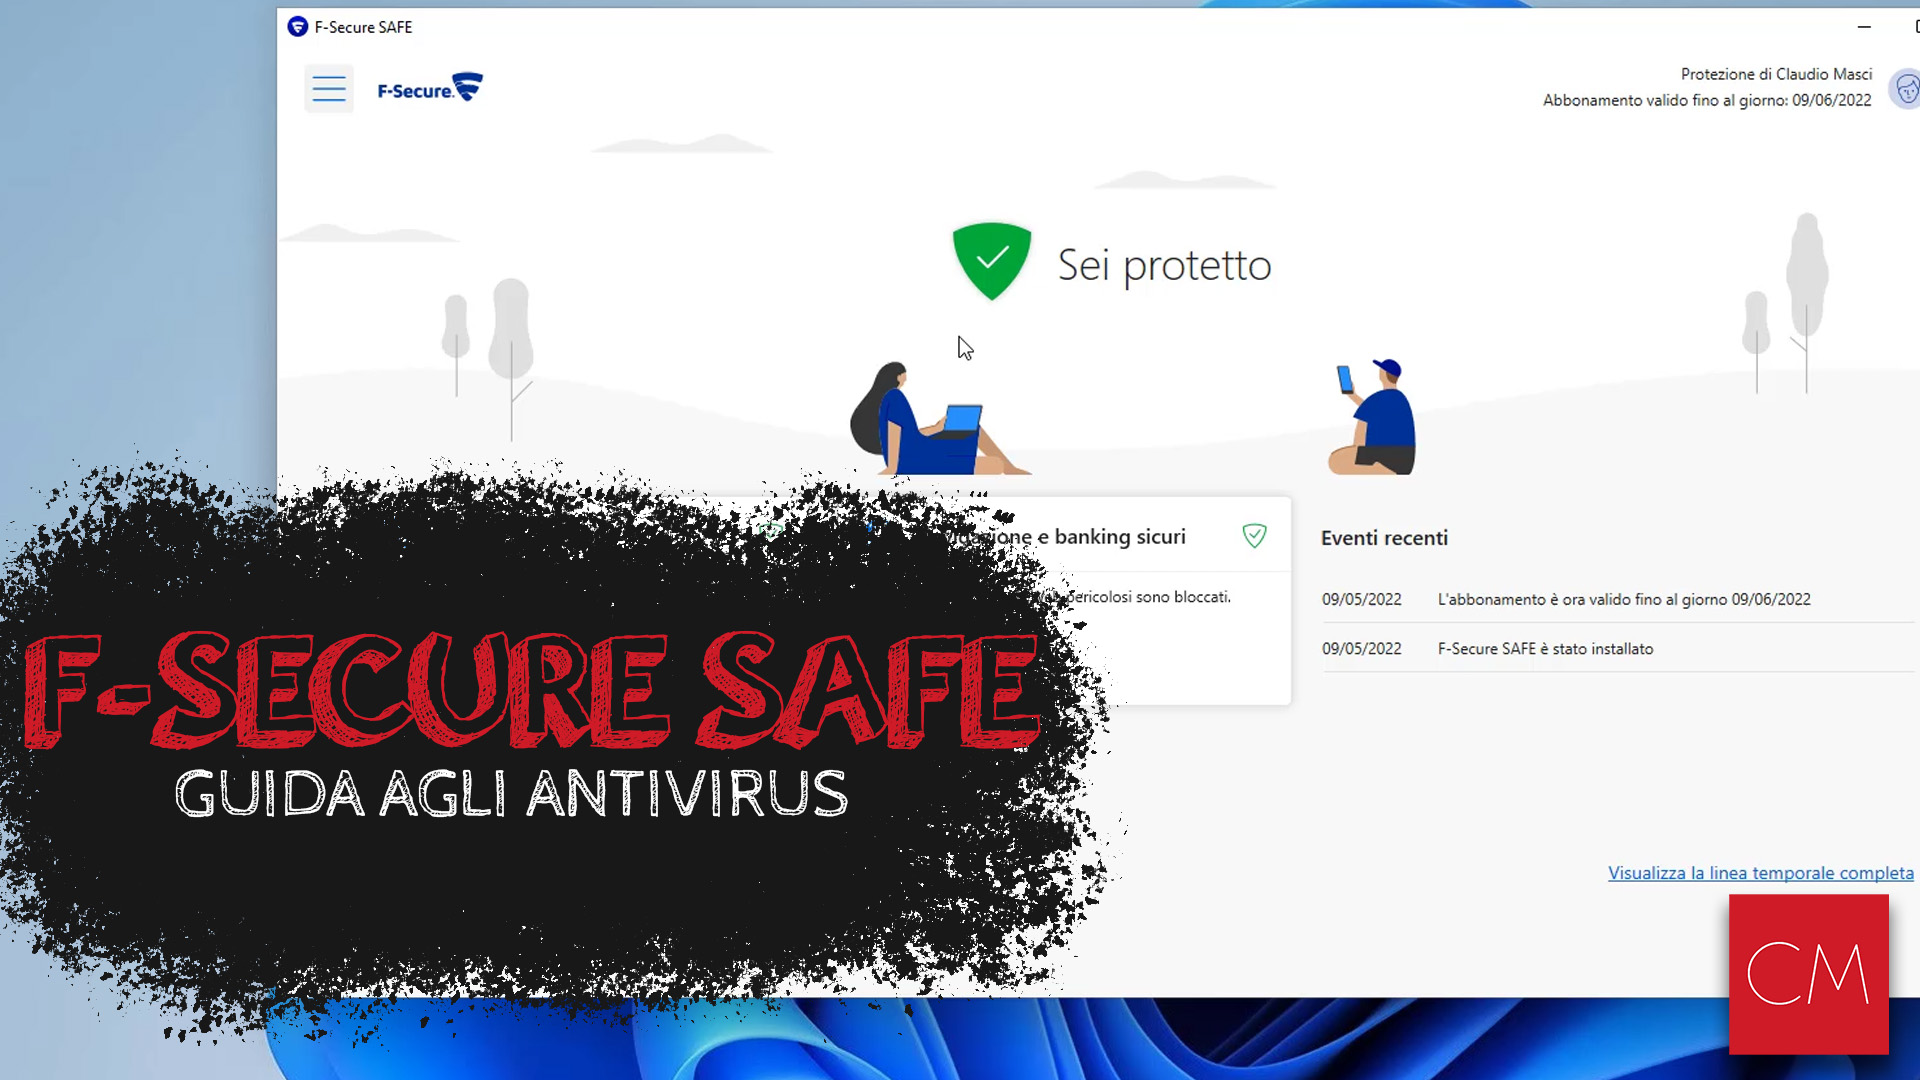 Guida Agli Antivirus | F-Secure SAFE